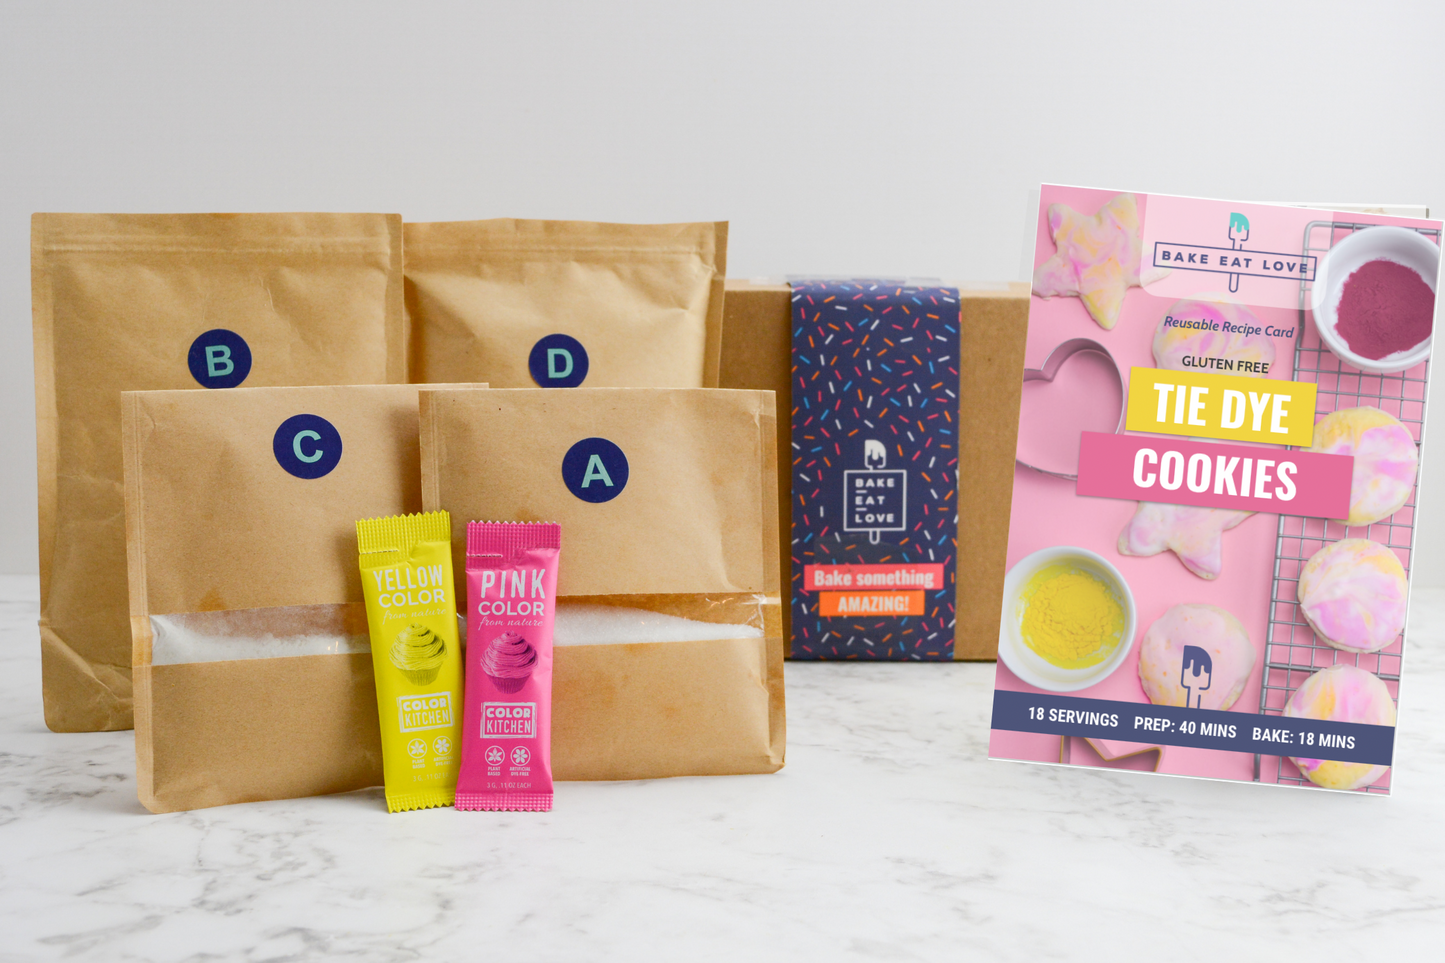 Kids Tie Dye Cookies | Gluten Free | No artificial dyes | Eco friendly packaging!